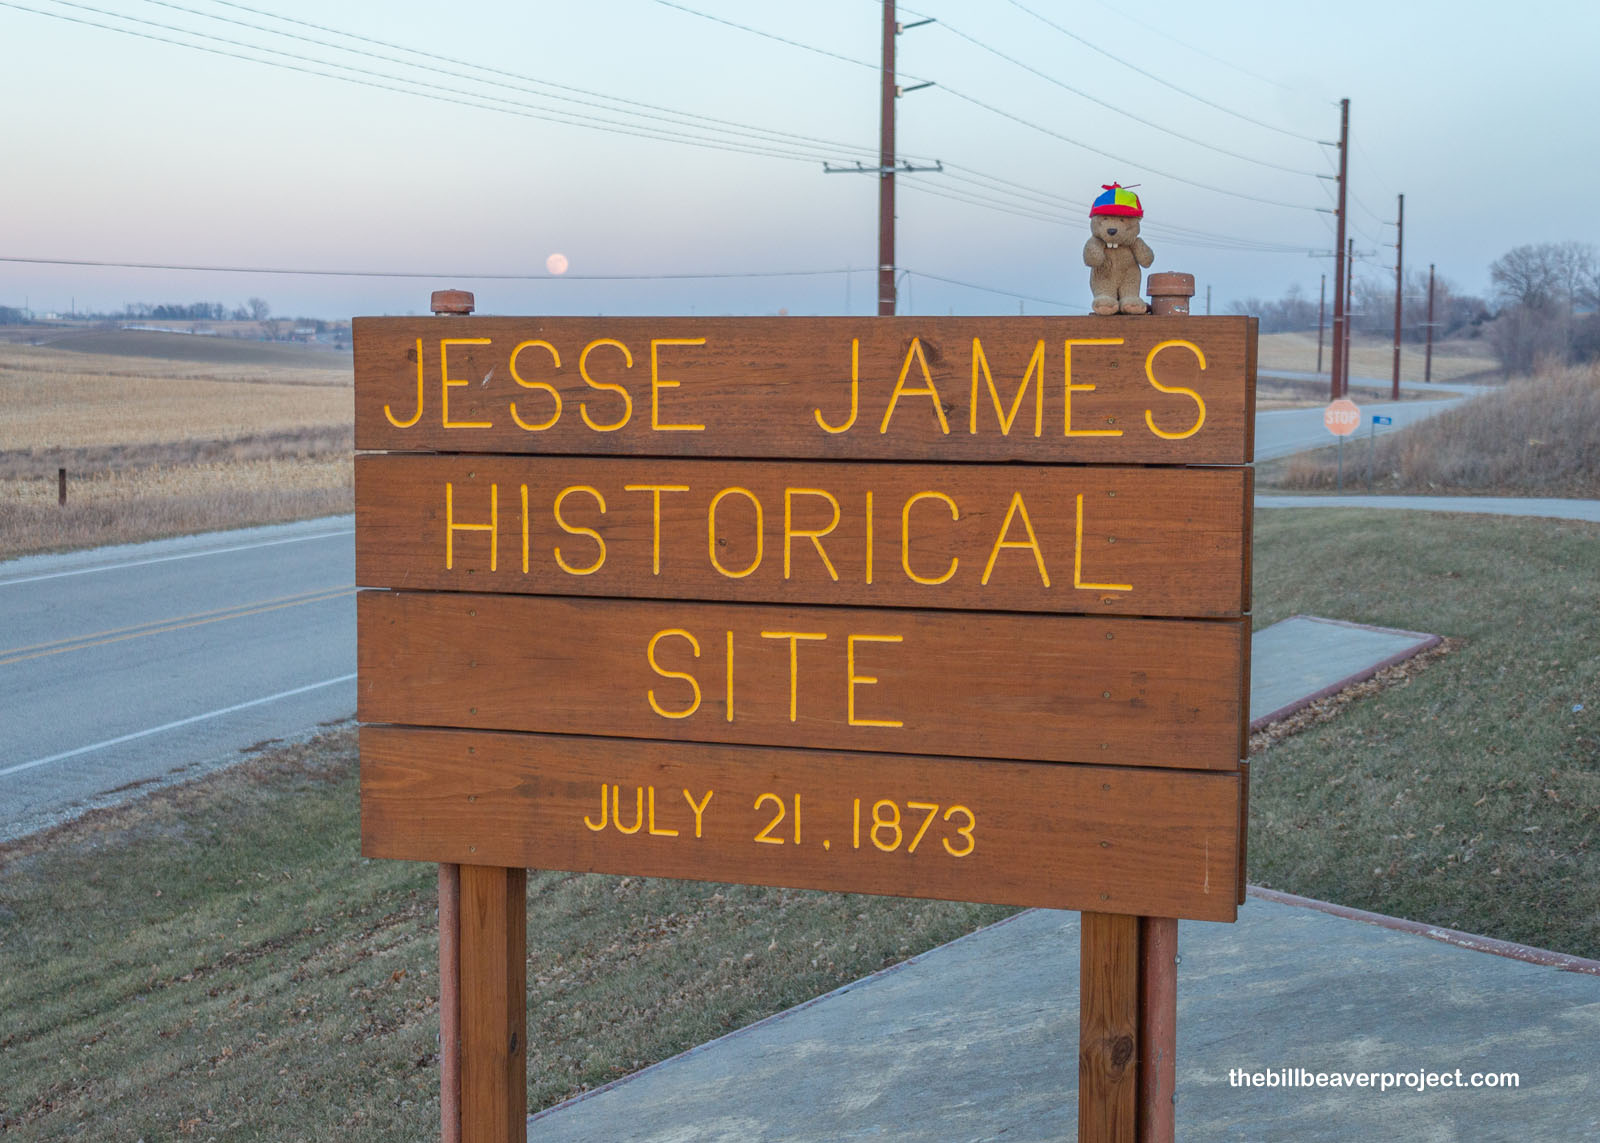 Jesse James Historical Site